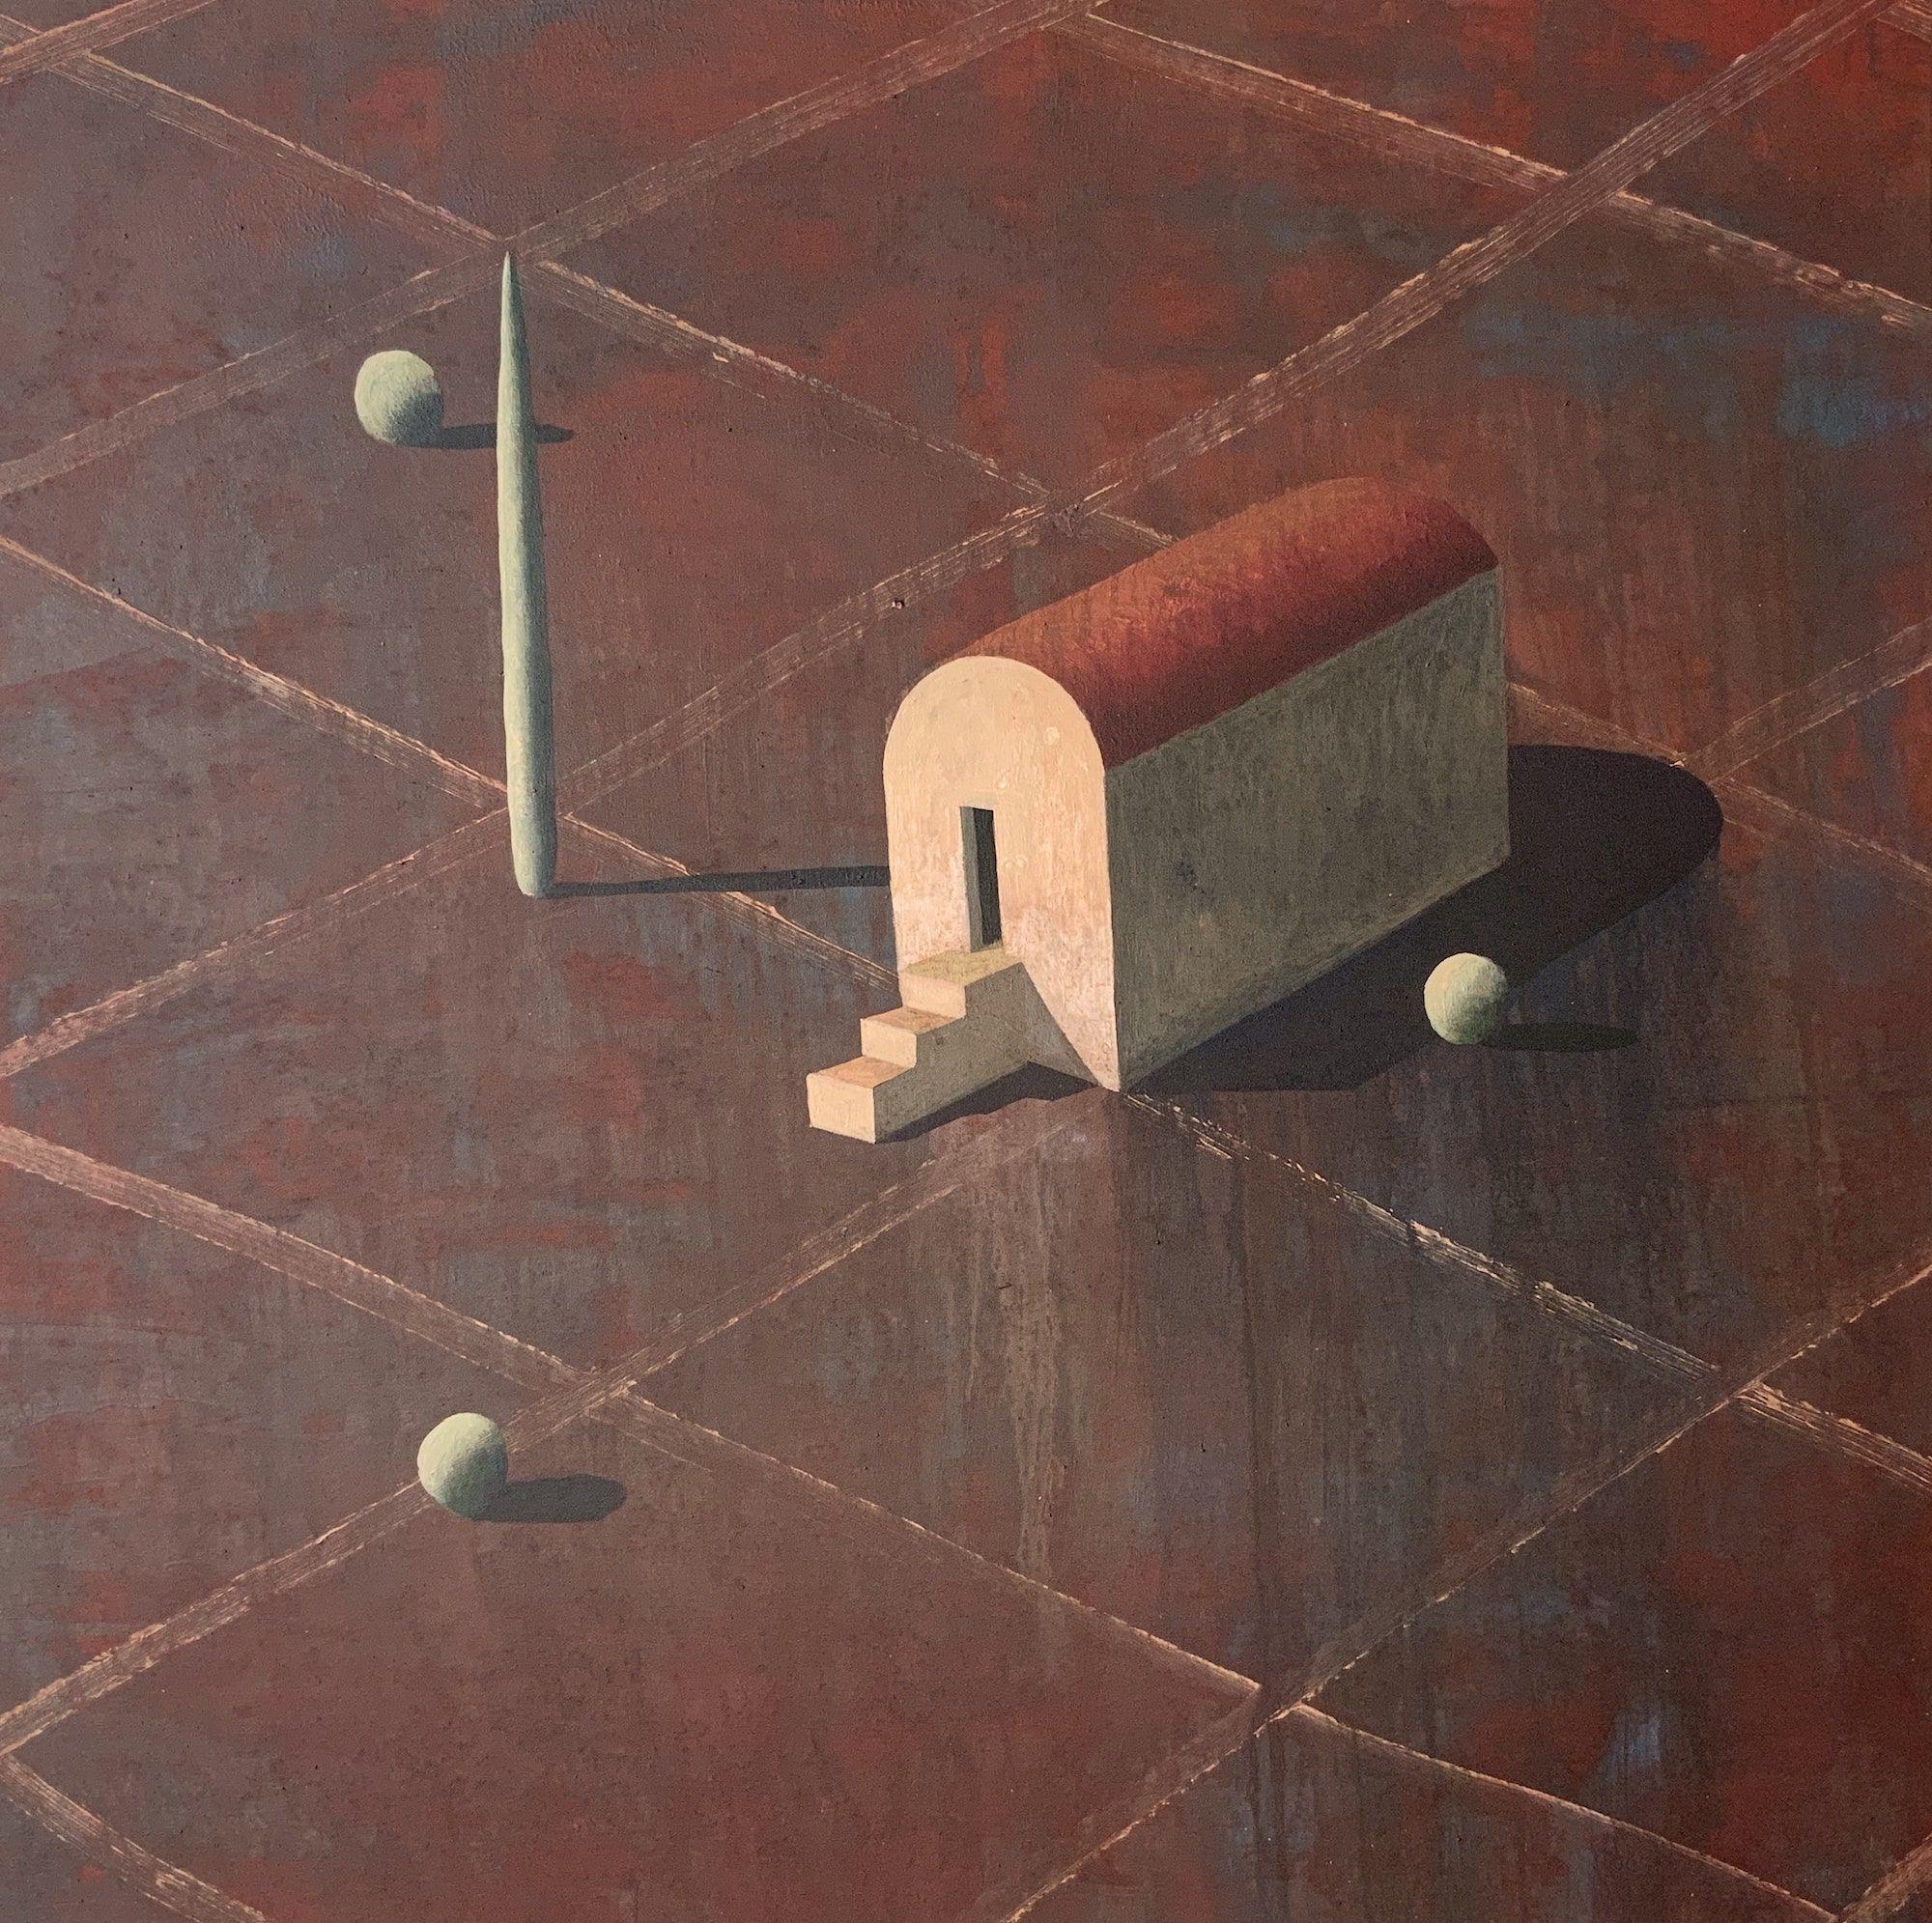 BIOT by Ramon Enrich - Geometric landscape painting, red tones, architecture